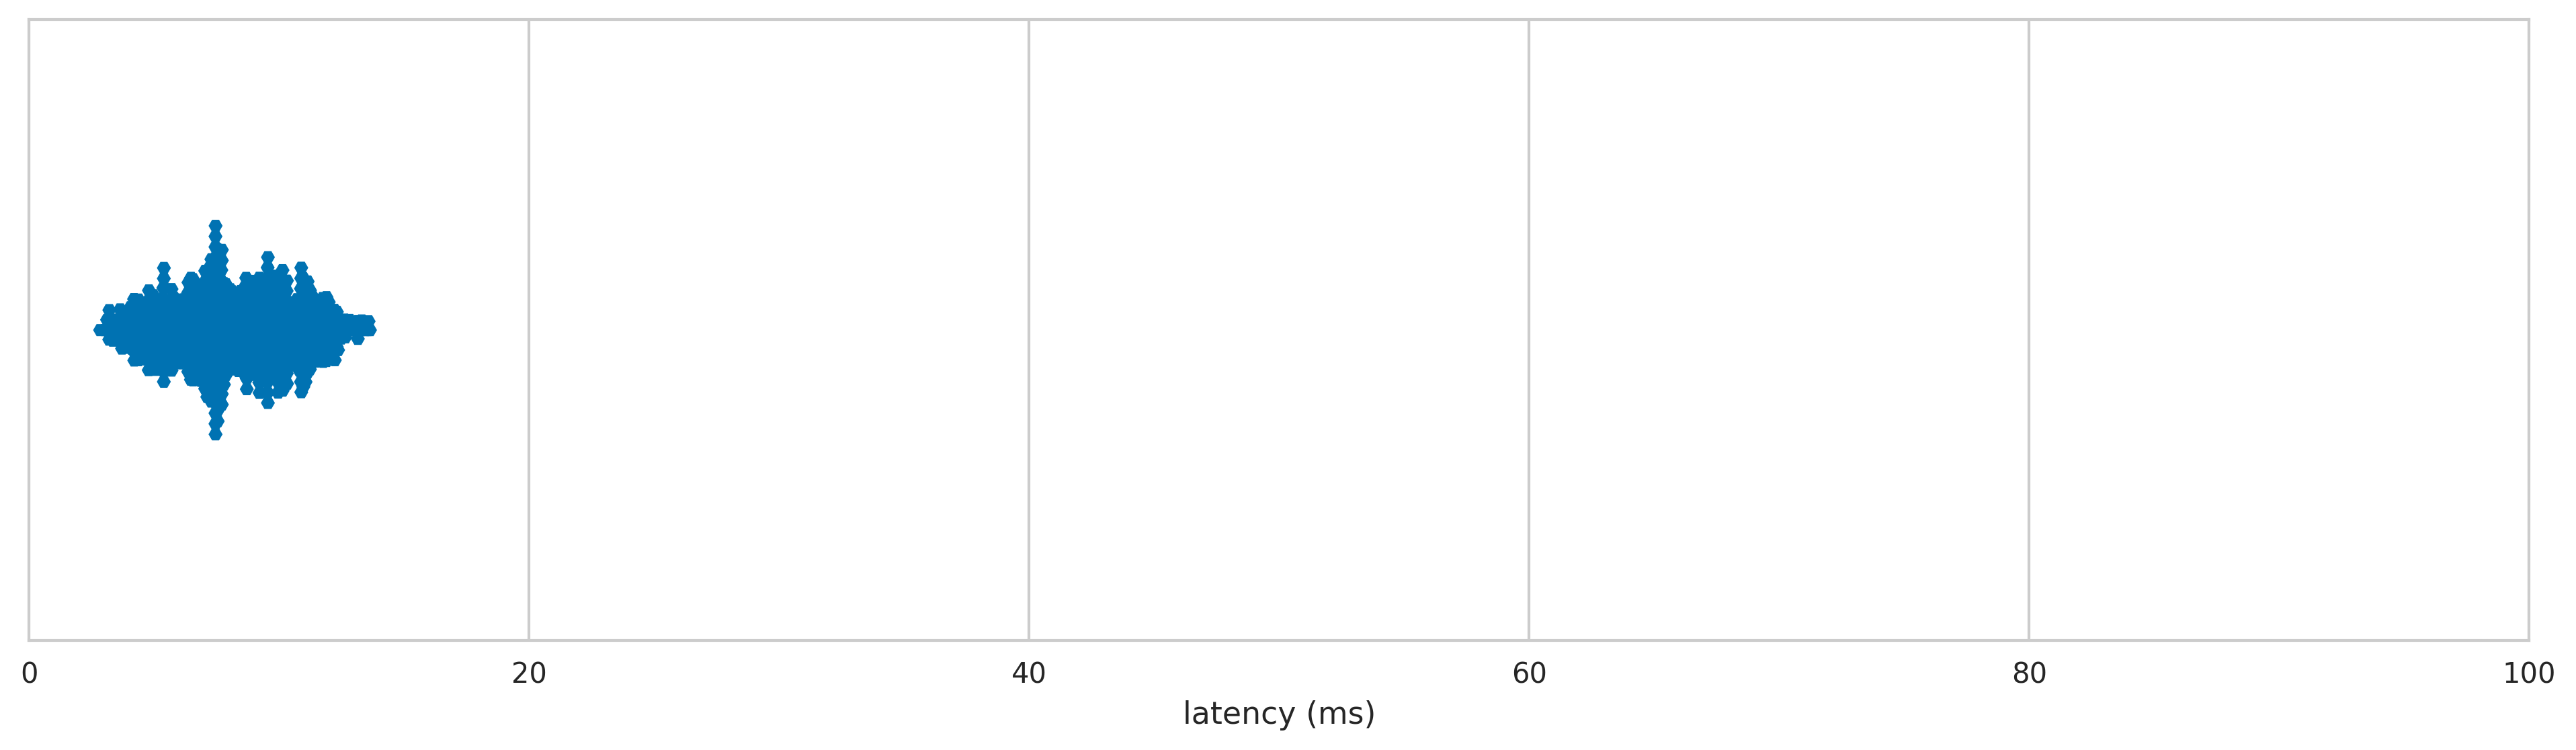 XBox 360 latency distribution 